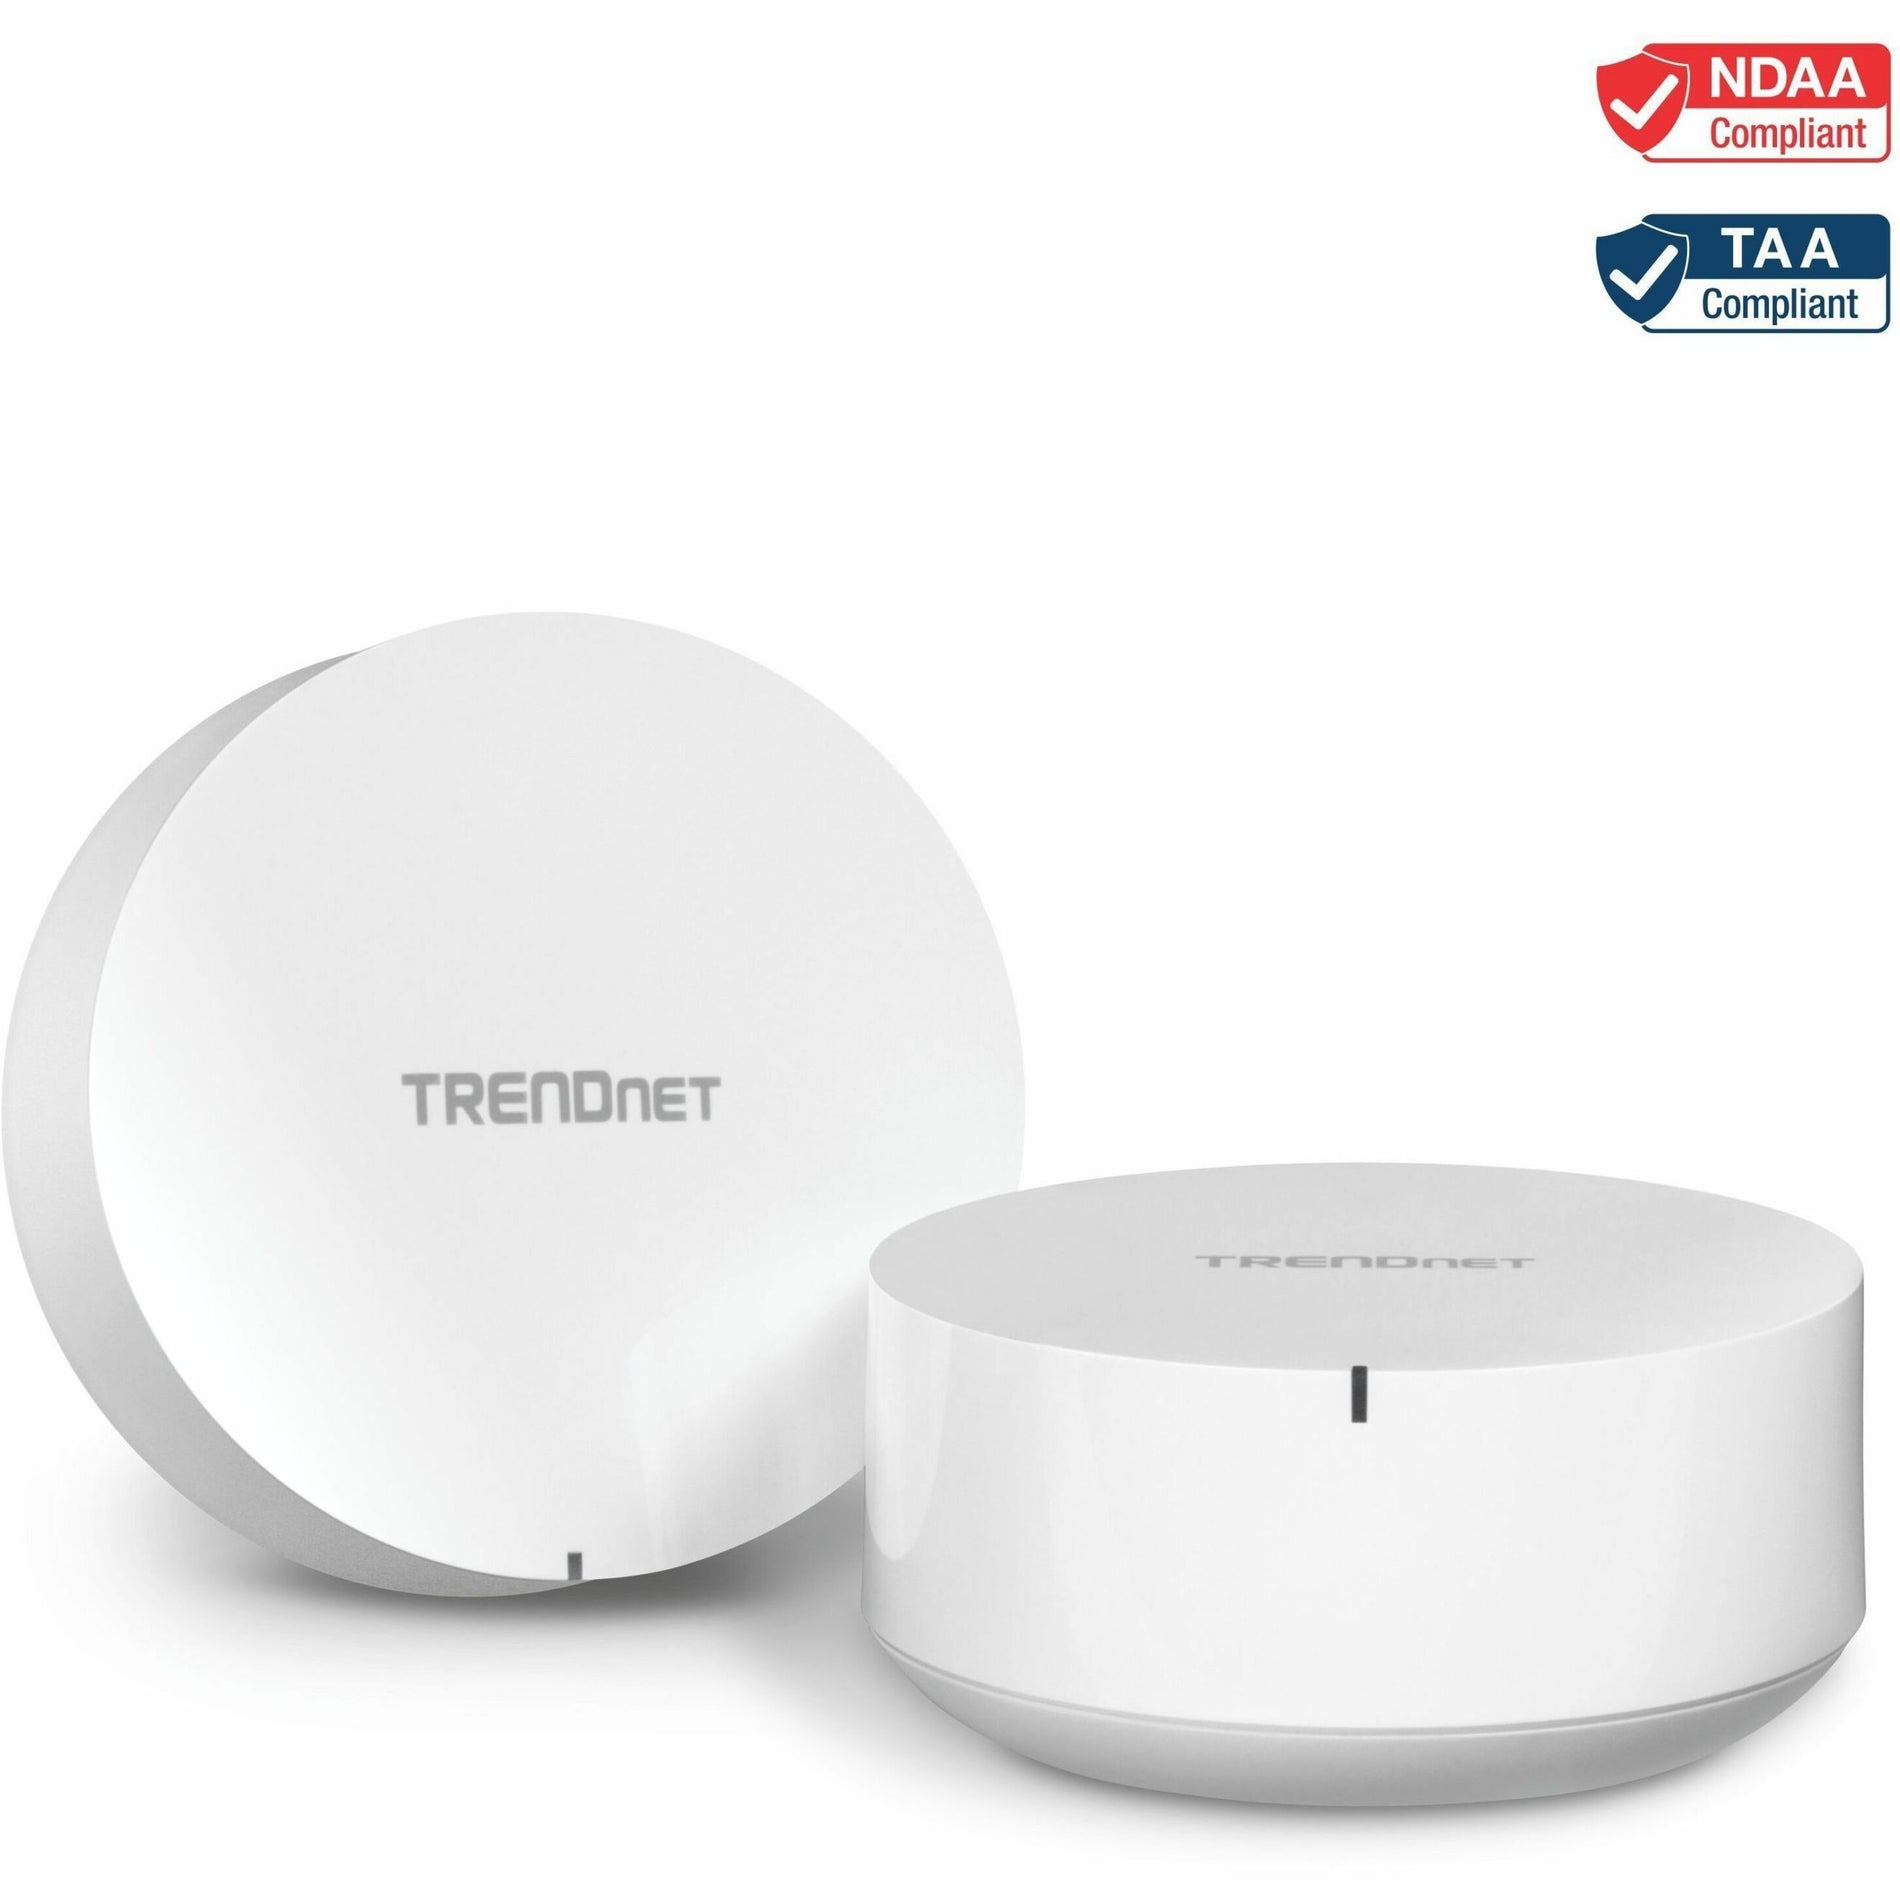 TRENDnet TEW-830MDR2K AC2200 WiFi Mesh Router System(2 pack), Gigabit Ethernet, 3 Year Warranty